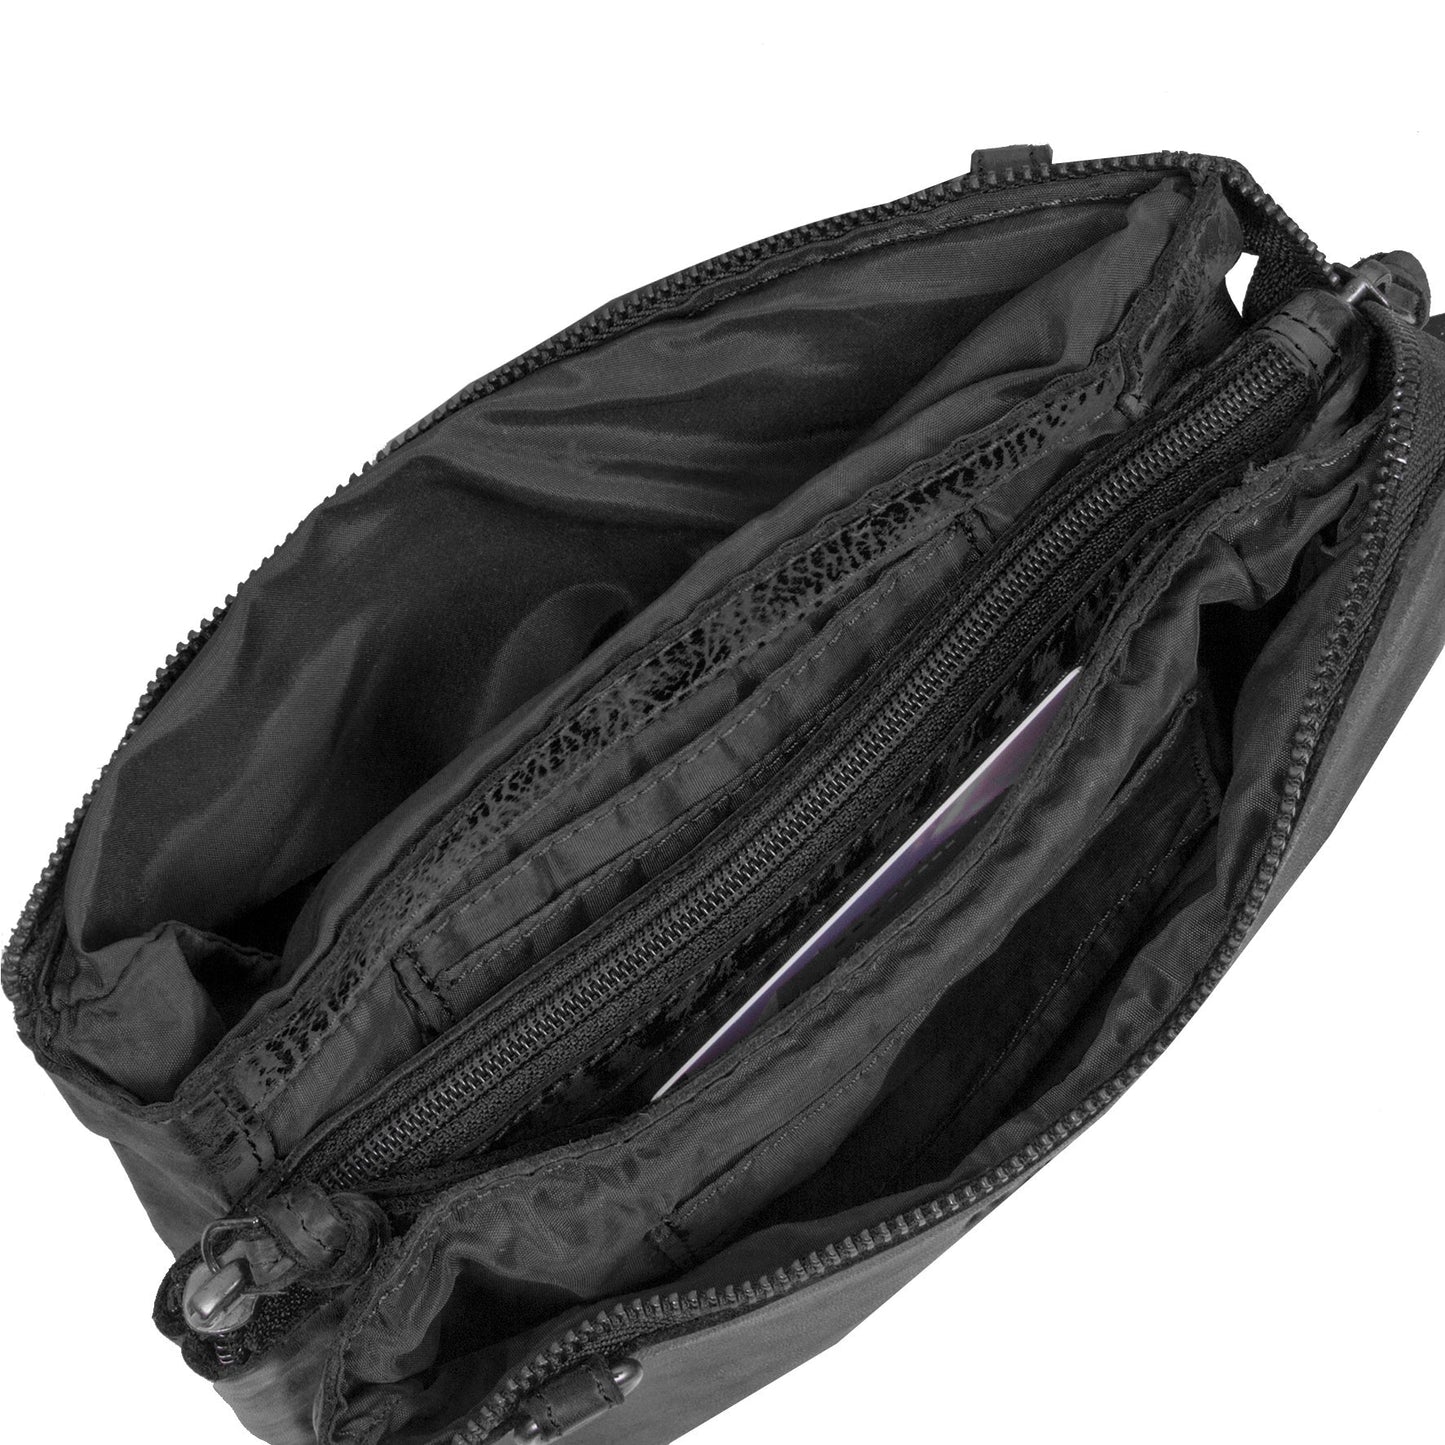 "Roma" 12.1307 Handtasche mit top zip von Justified - Laure Bags and Travel